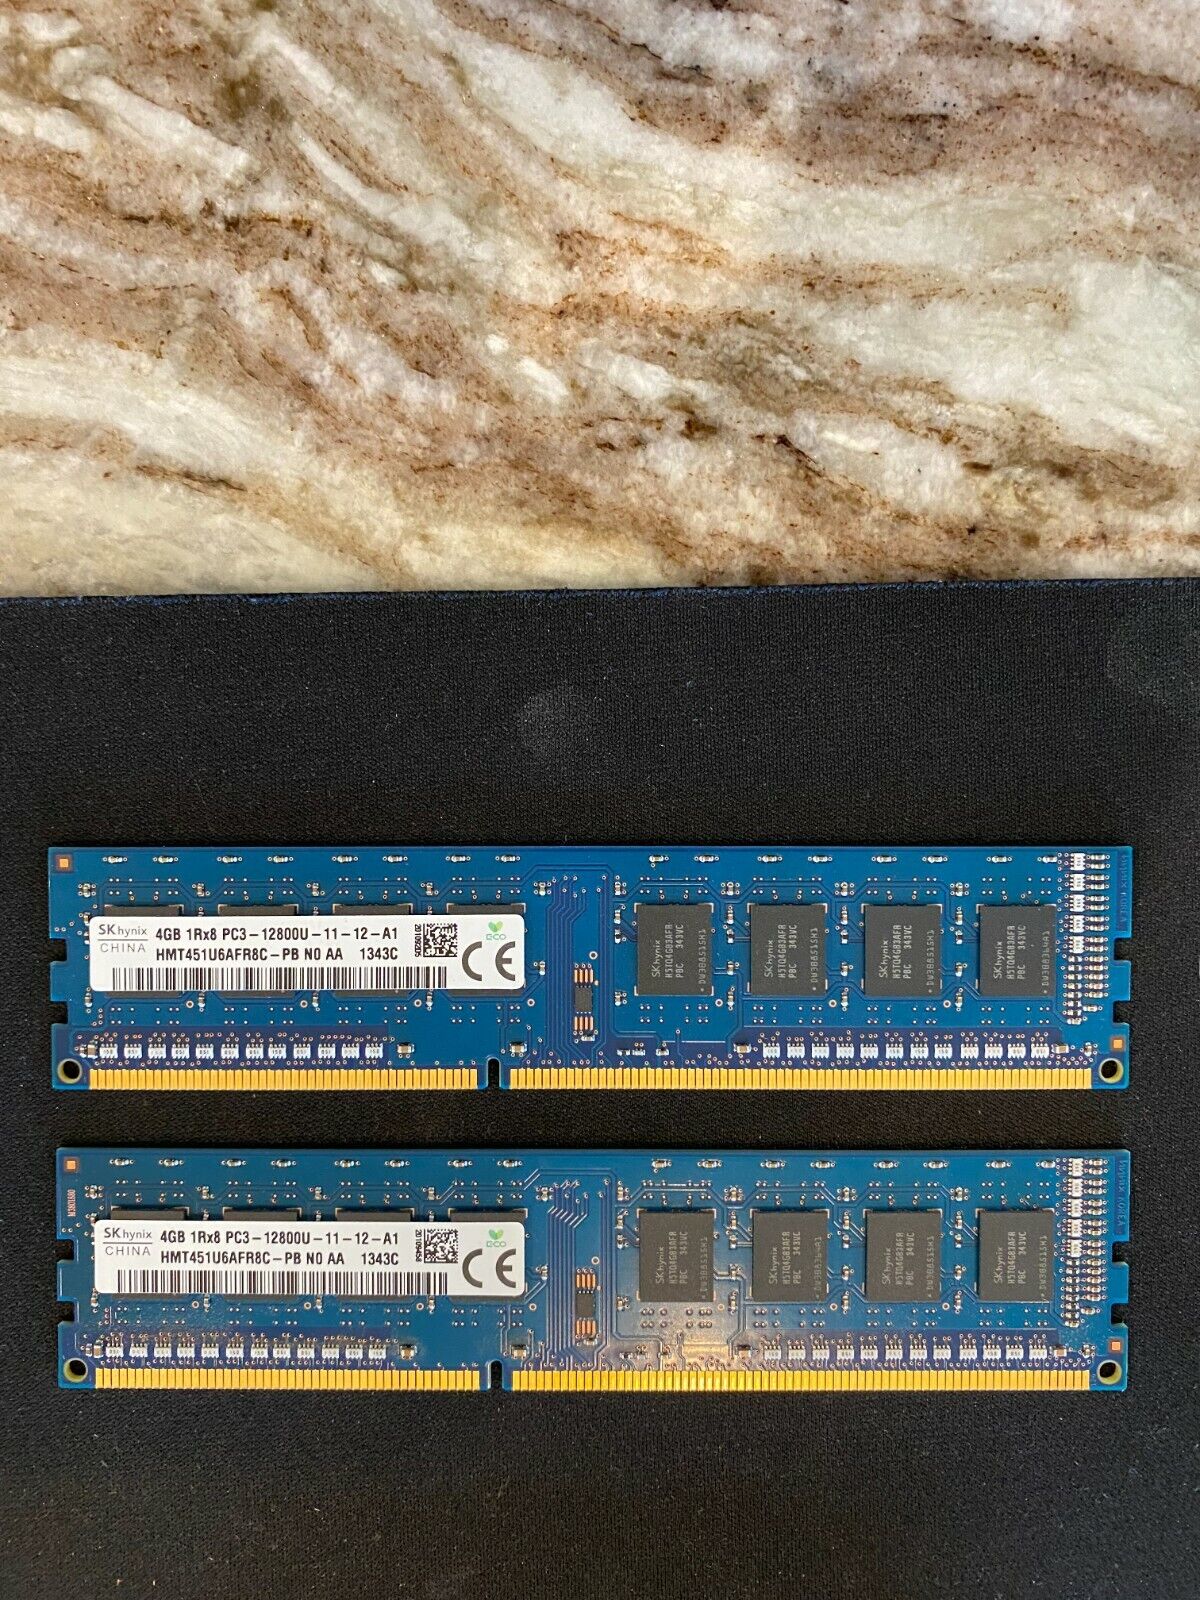 Hynix PC3-12800 8 GB (4GB x 2) DIMM 1600 MHz DDR3 SDRAM Memory